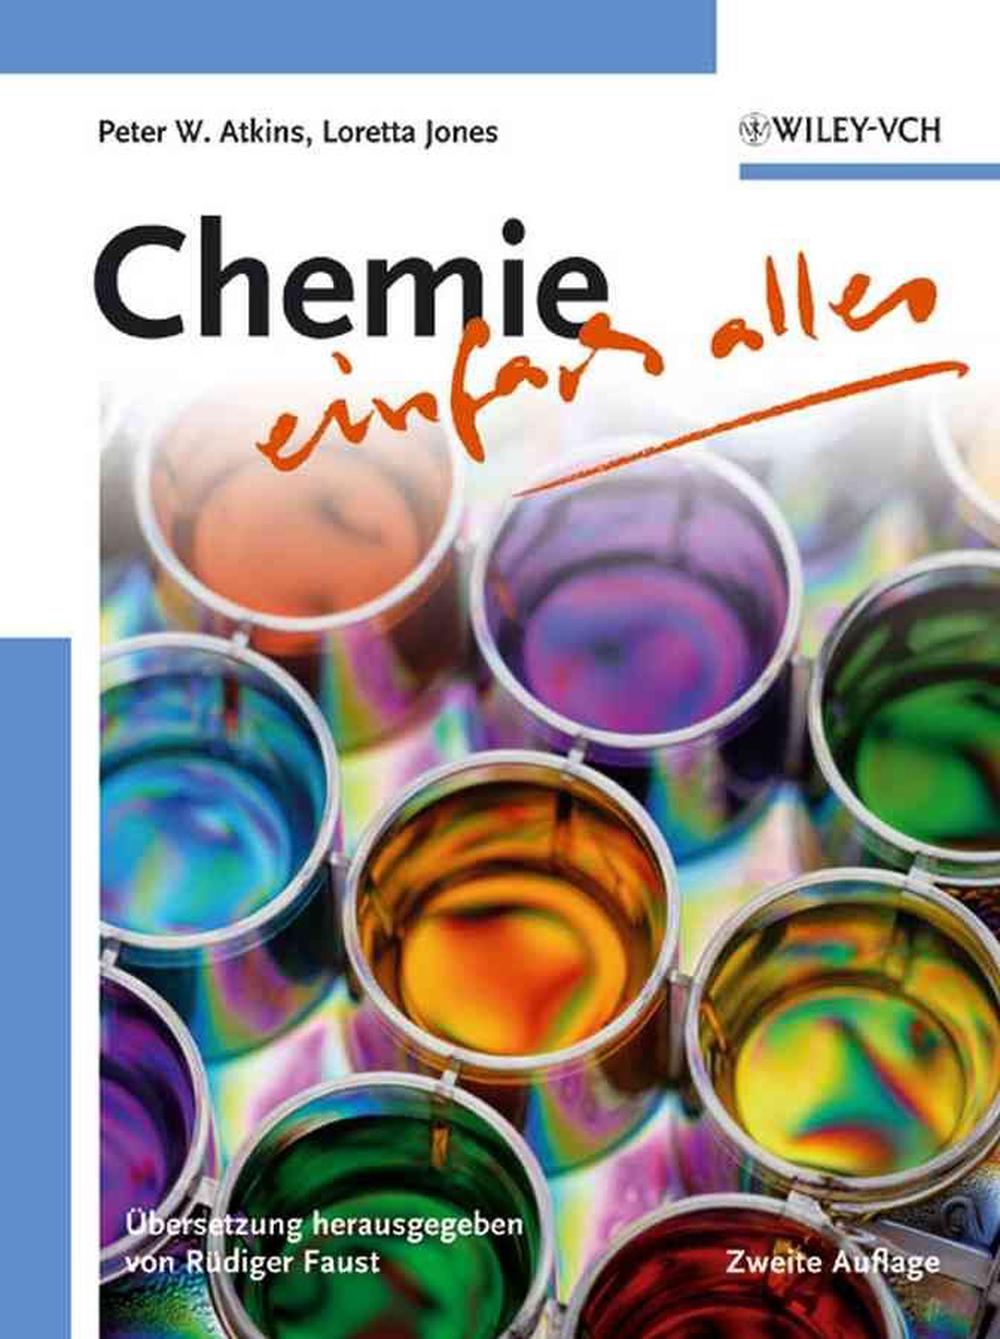 atkins physikalische chemie pdf to jpg